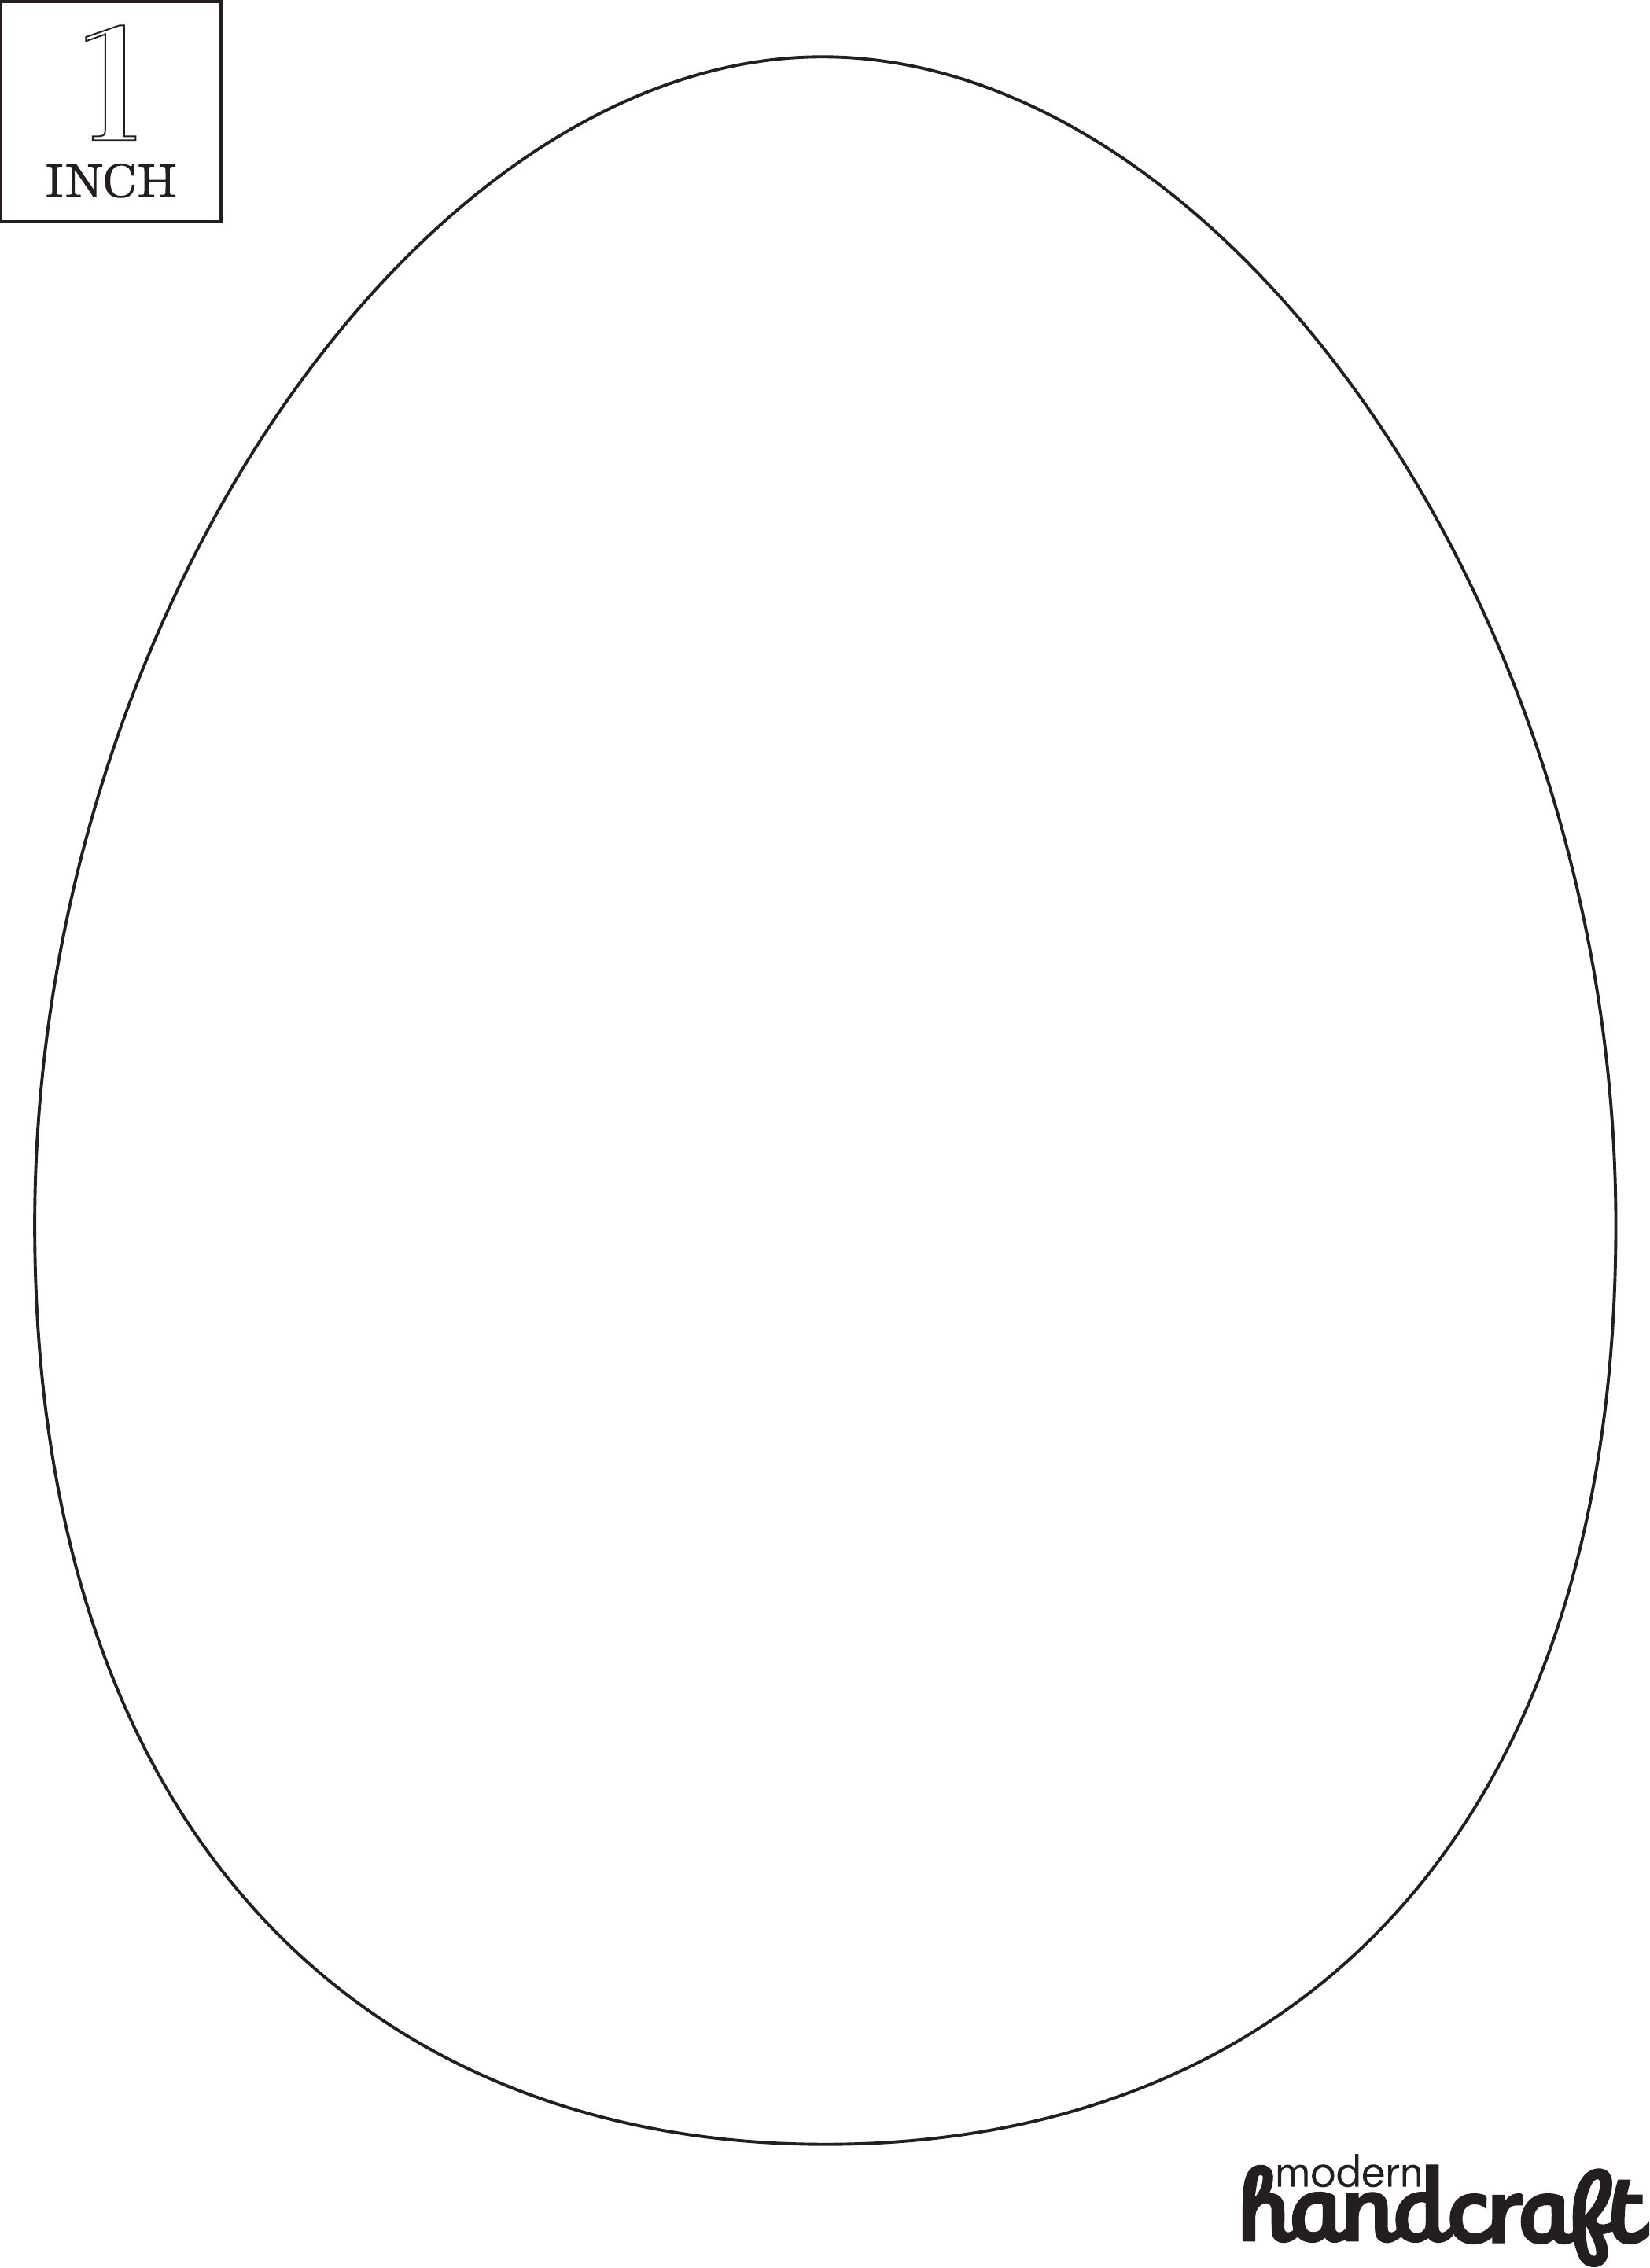 Шаблон яйцо распечатать. Яйцо трафарет. Шаблон пасхального яйца. Яйцо для вырезания. Форма яйца трафарет.